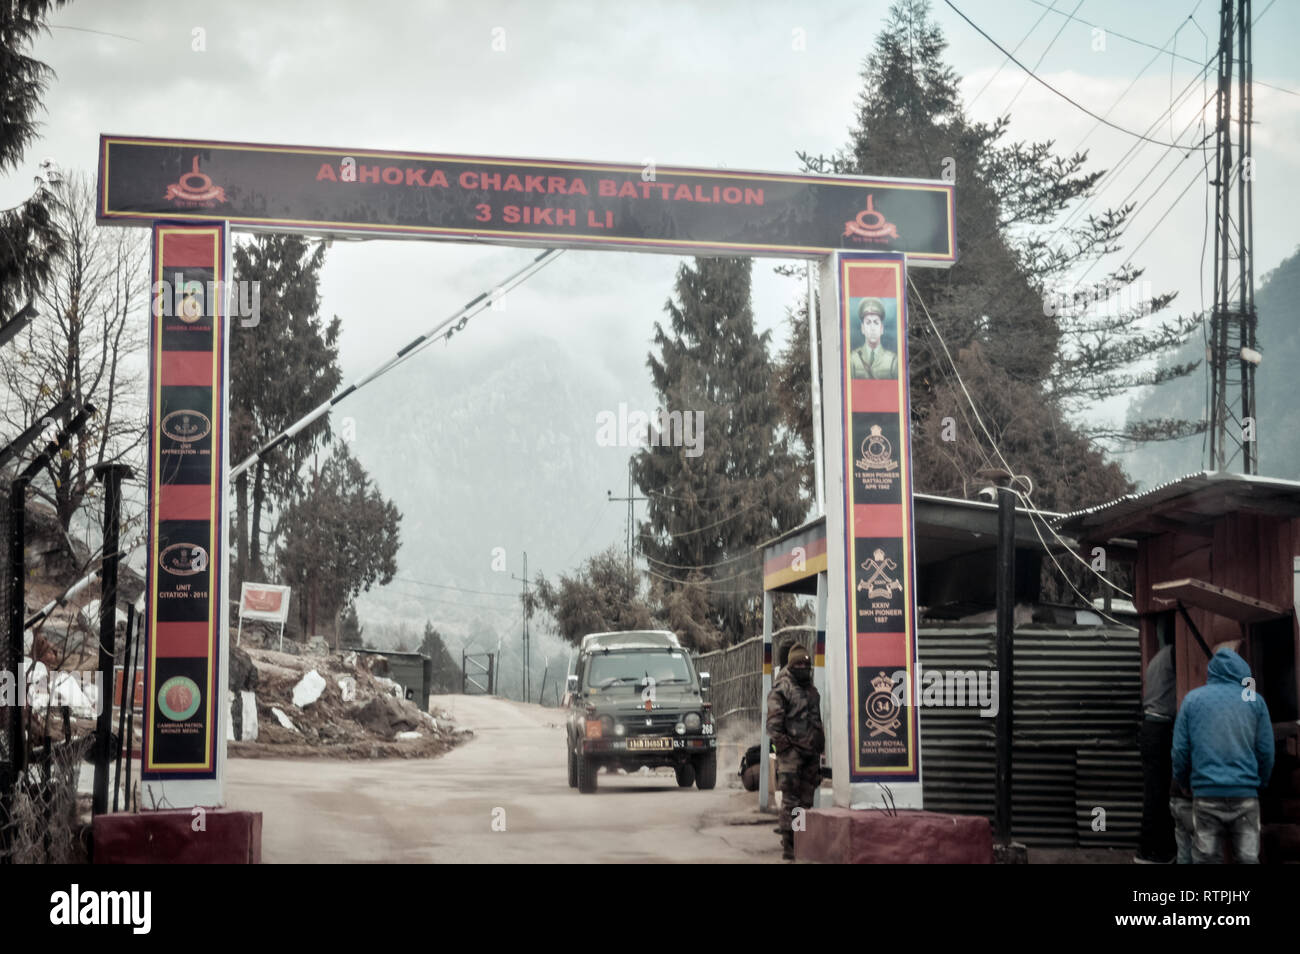 Pulwama, Jammu Srinagar National Highway, India 14 Febbraio 2019: Indiano post dopo aver attaccato da un veicolo a carico kamikaze da islamici pakistani mil Foto Stock